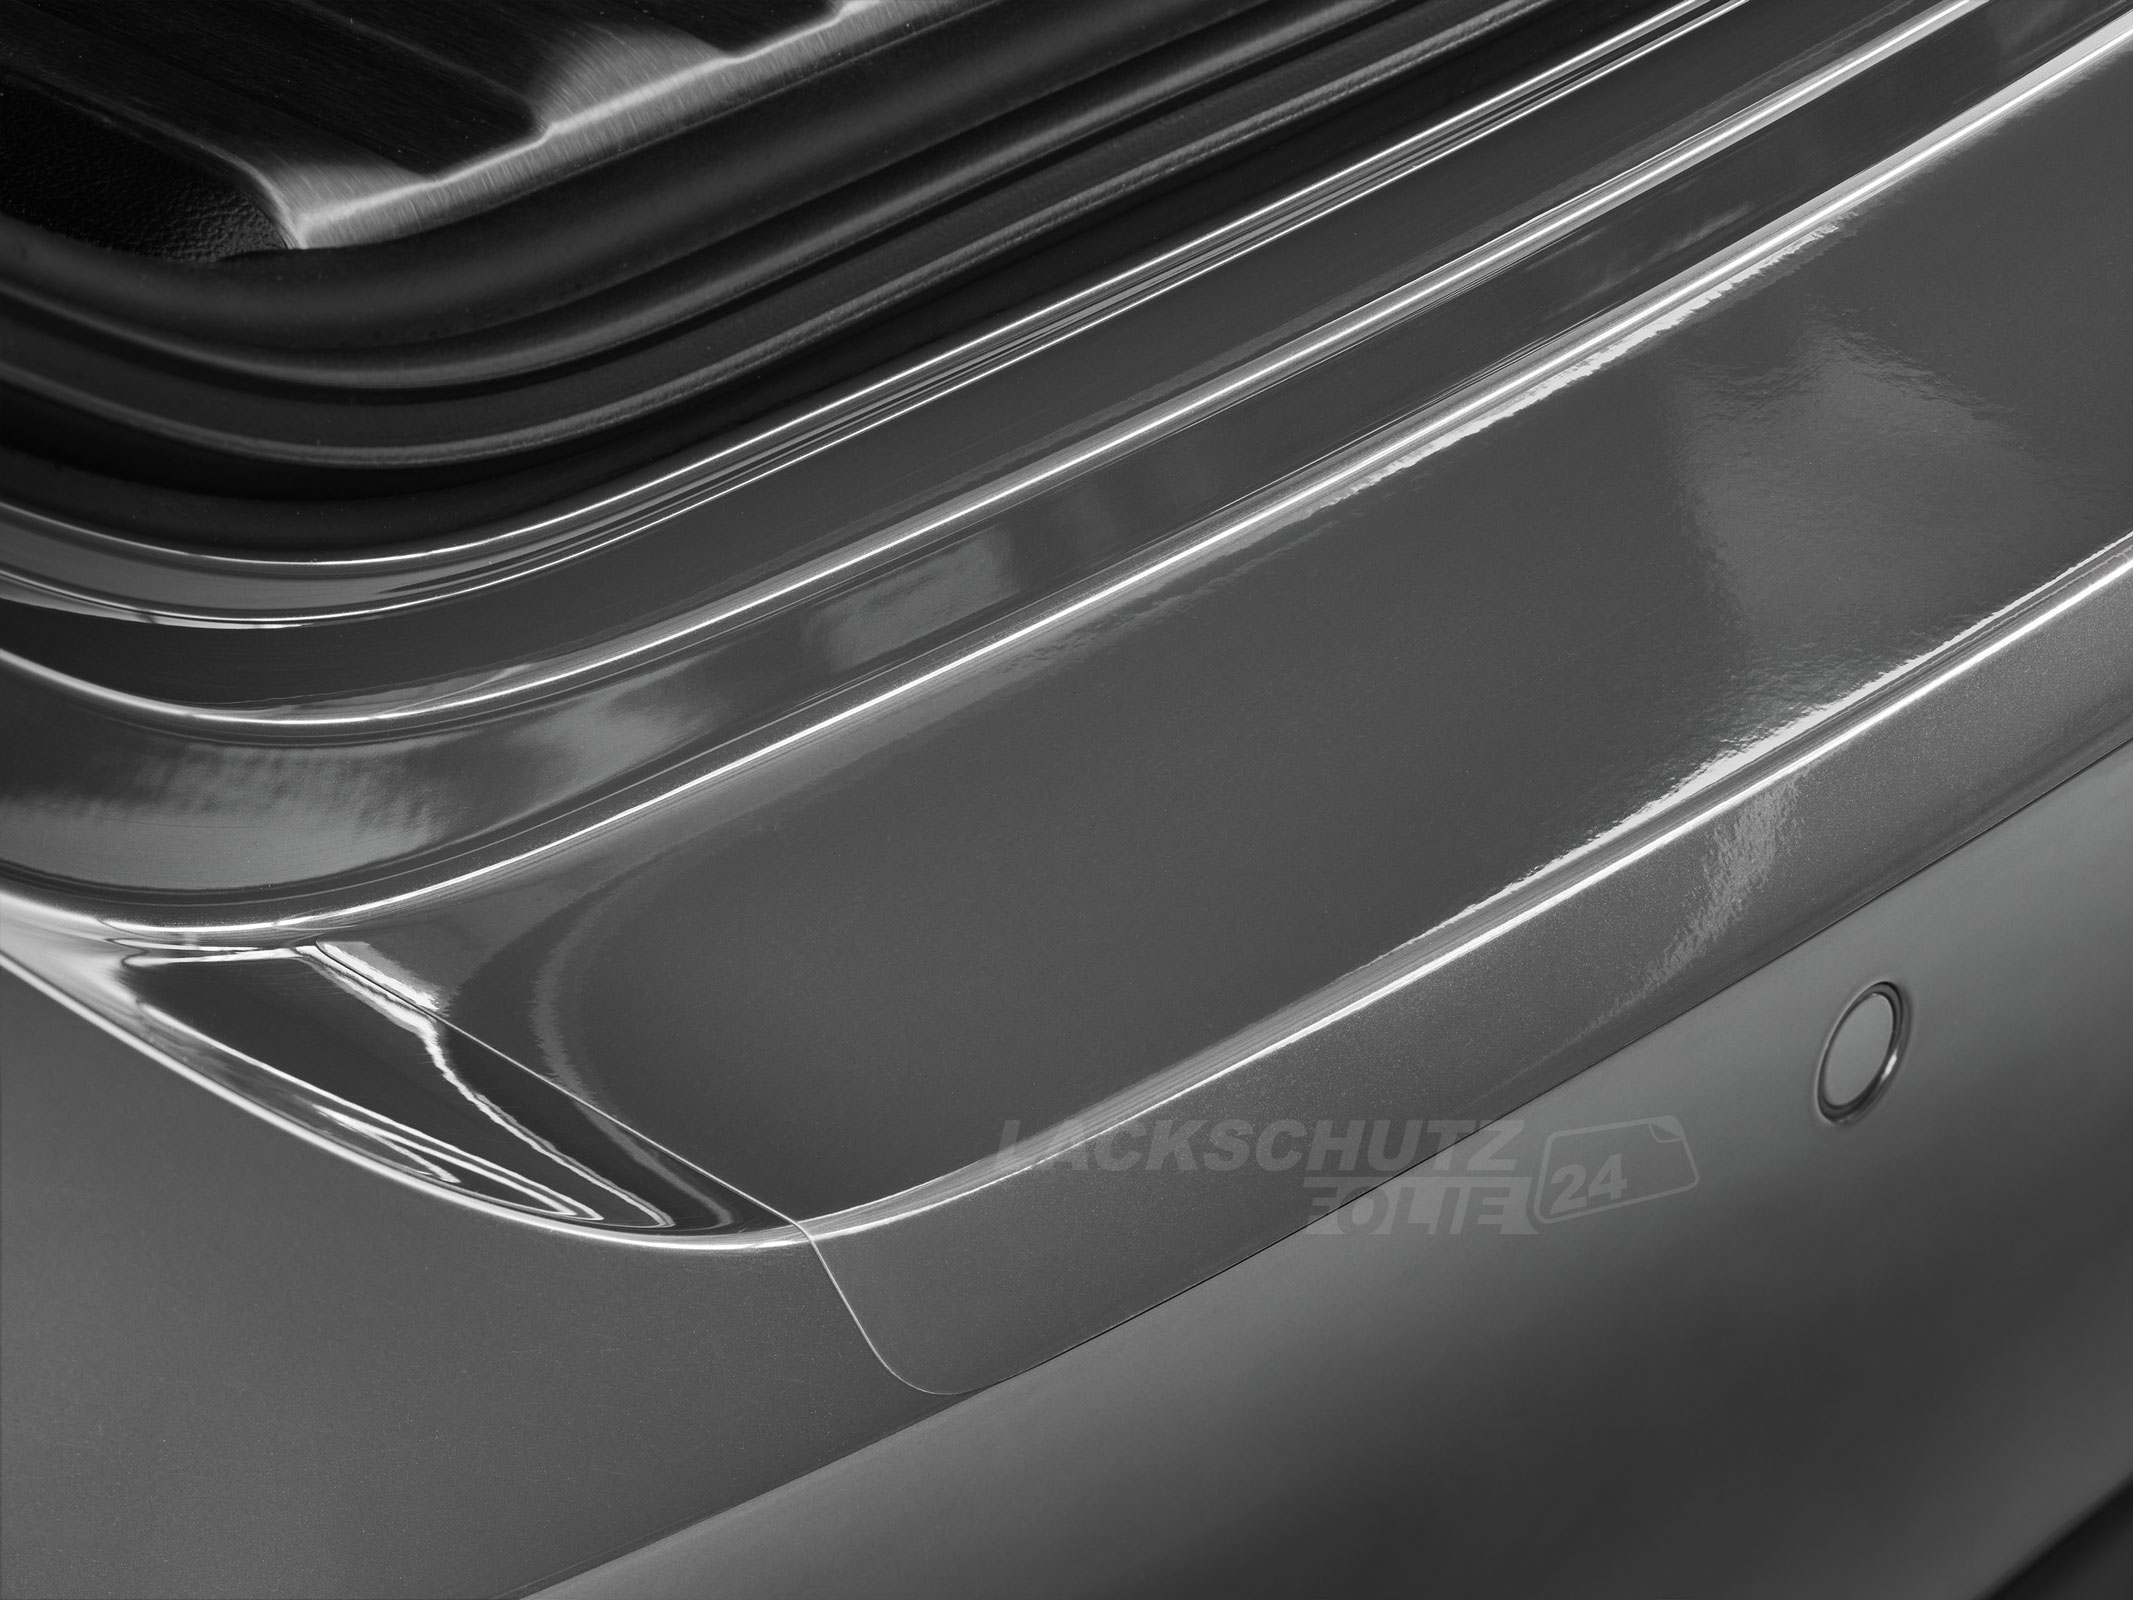 Ladekantenschutzfolie - Transparent Glatt Hochglänzend 240 µm stark für Fiat Idea ab BJ 2004